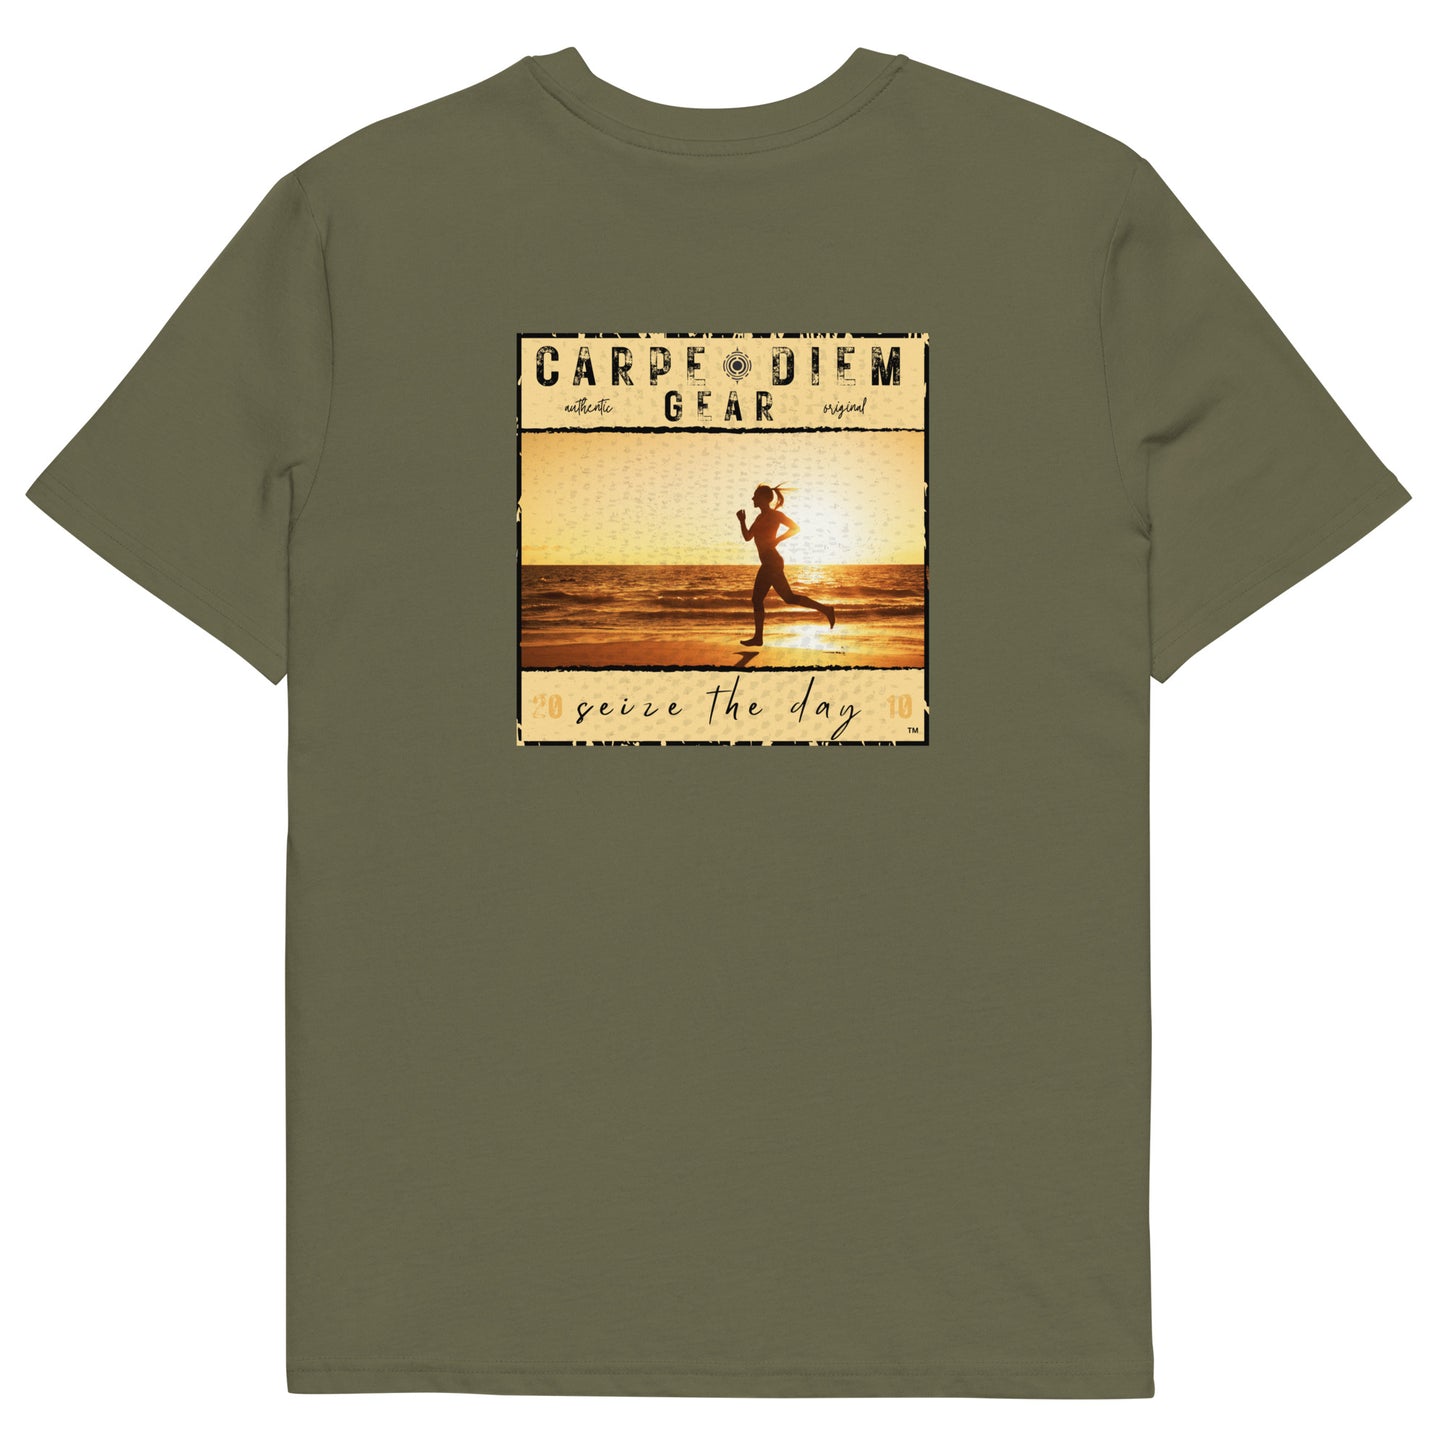 Carpe Diem Gear | Running | Yellow Square Female Runner DELUXE | Unisex 100% Organic Cotton T-Shirt